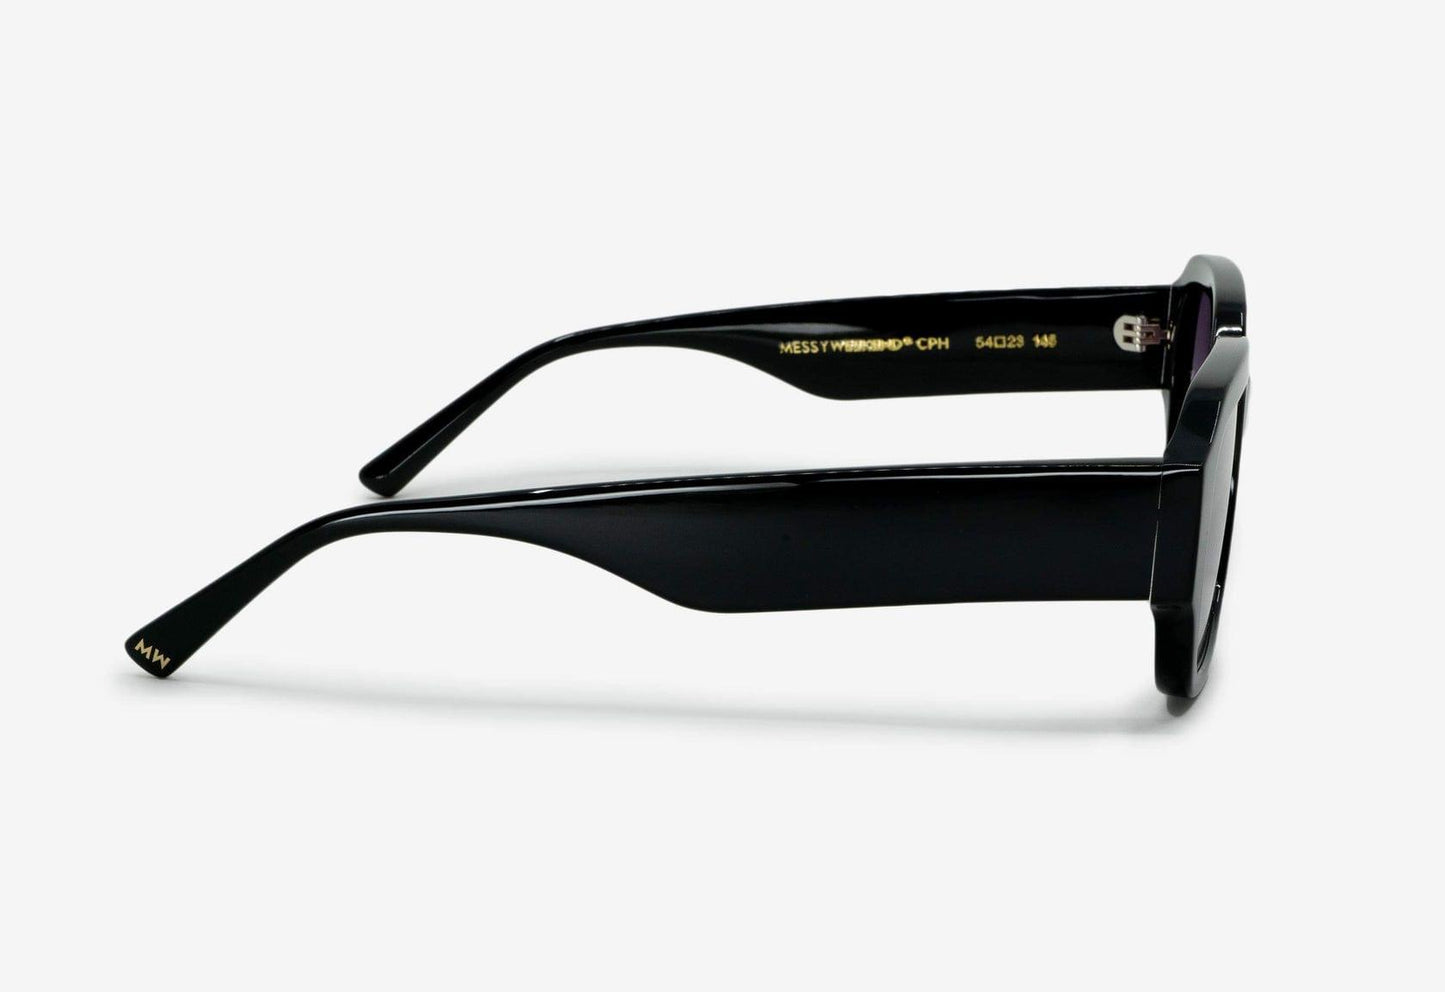 Downey, Rectangular sunglasses for men and women grey lens UV400 protection